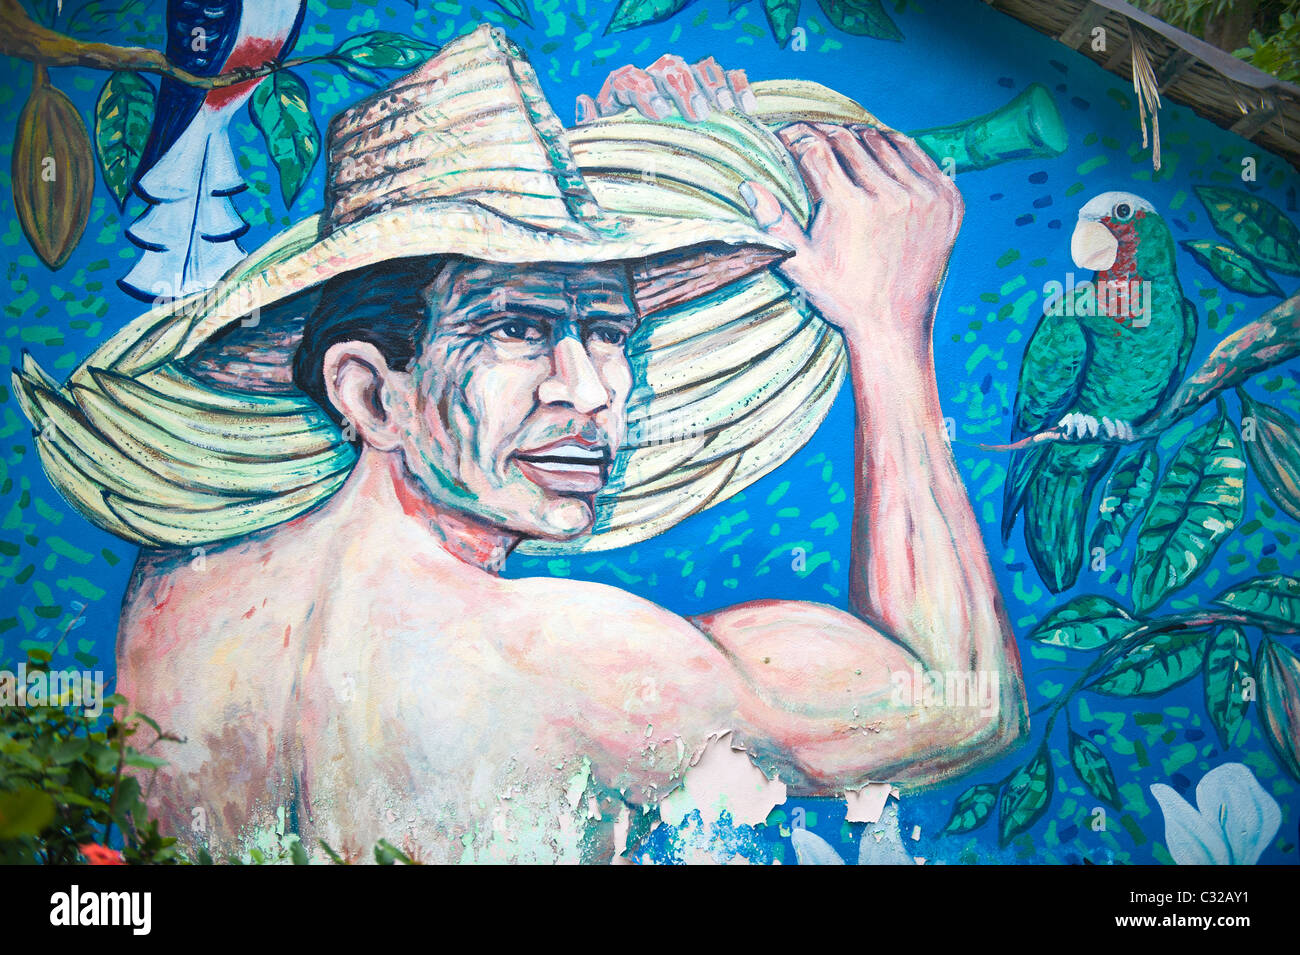 La peinture murale représentant un homme tenant les bananes, Baracoa, Cuba Banque D'Images